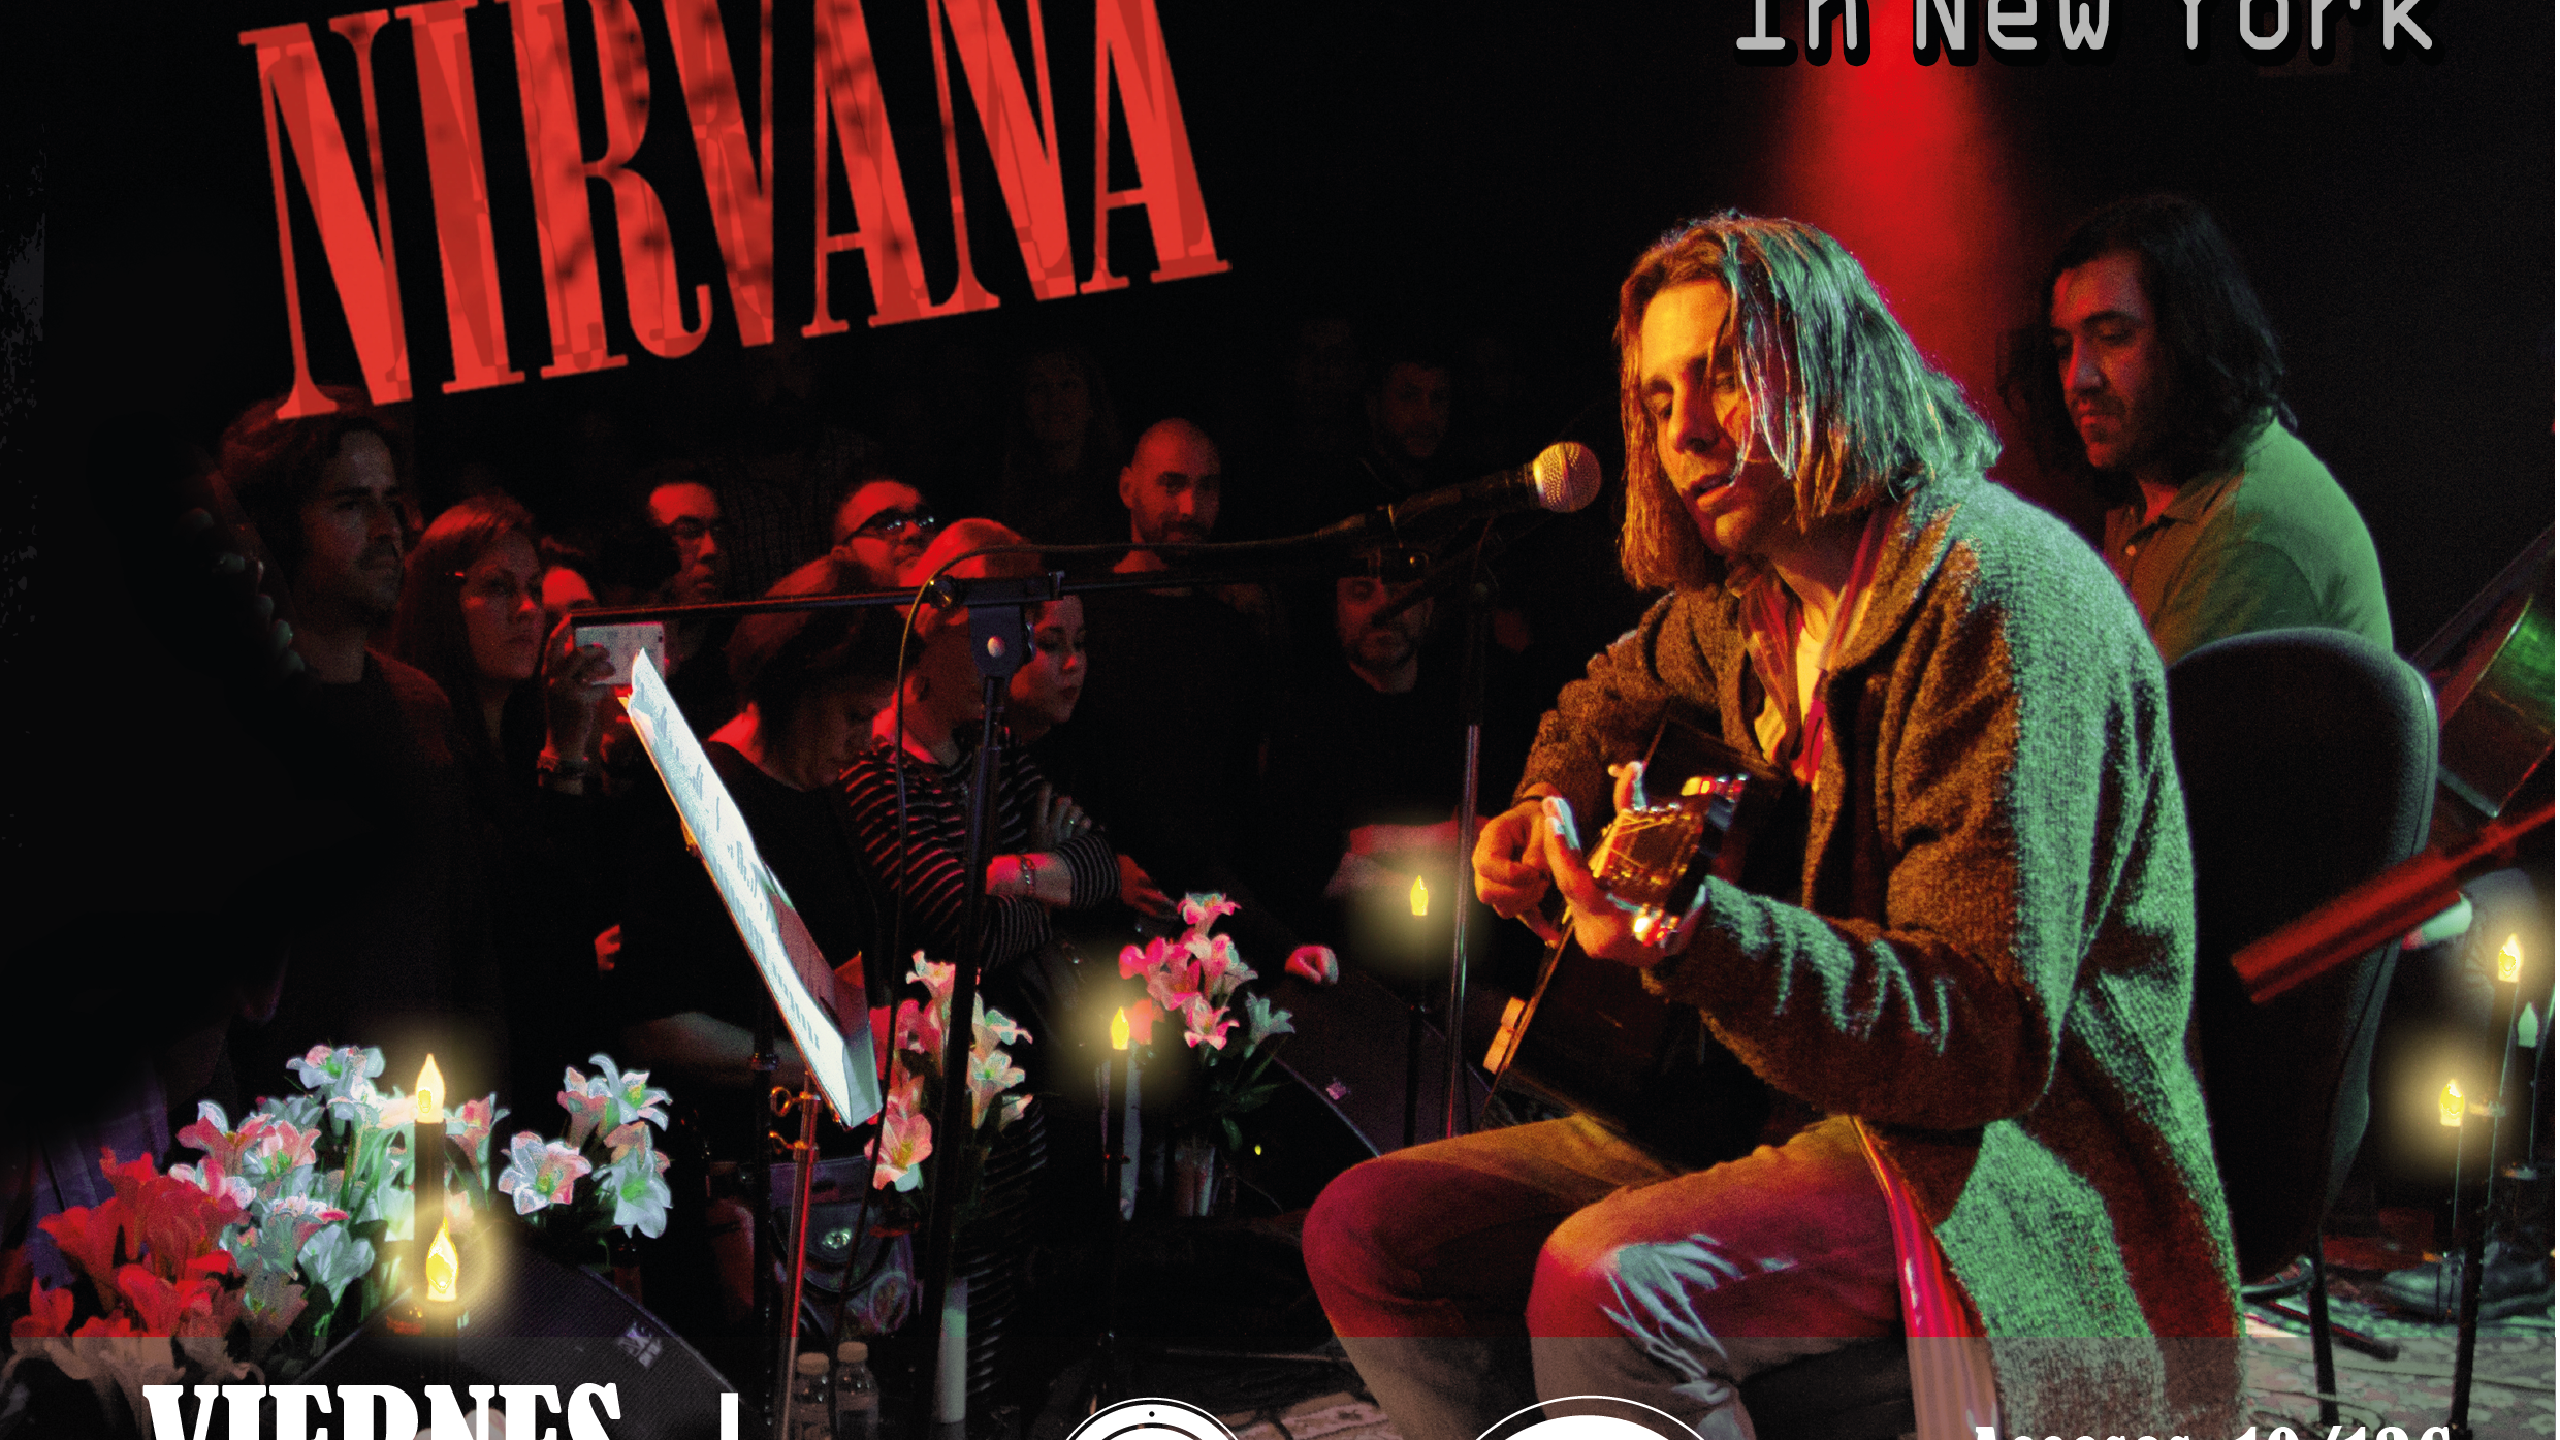 Nirvana love buzz. Nirvana Concert. The Buzz lovers группа. Nirvana концерт. Nirvana концерт 1386.